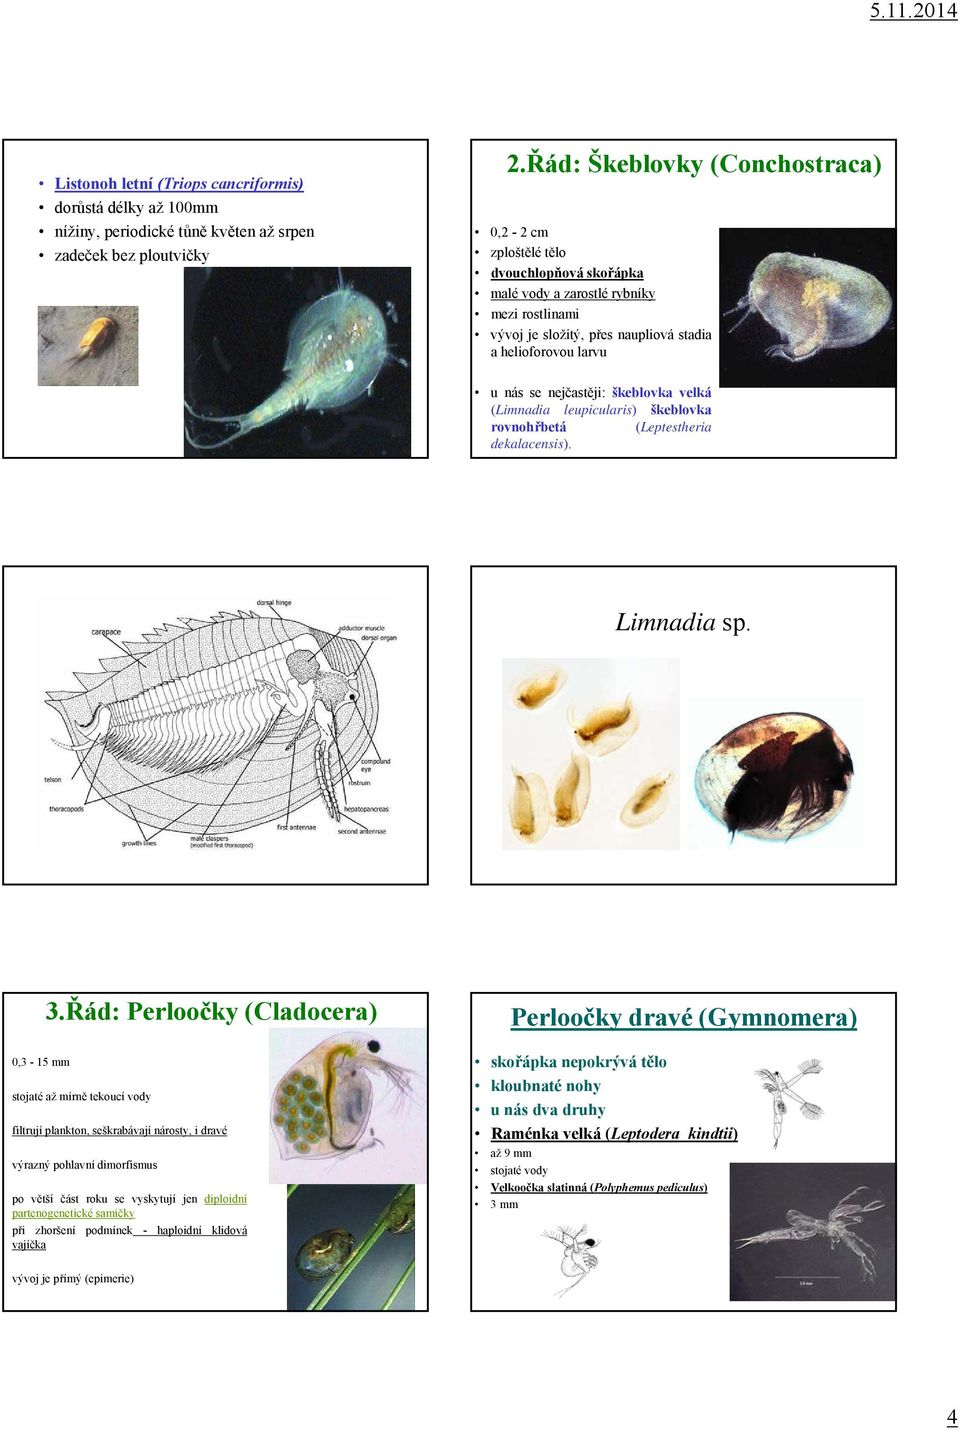 nejčastěji: škeblovka velká (Limnadia leupicularis) škeblovka rovnohřbetá (Leptestheria dekalacensis). Limnadia sp. 0,3-15 mm 3.